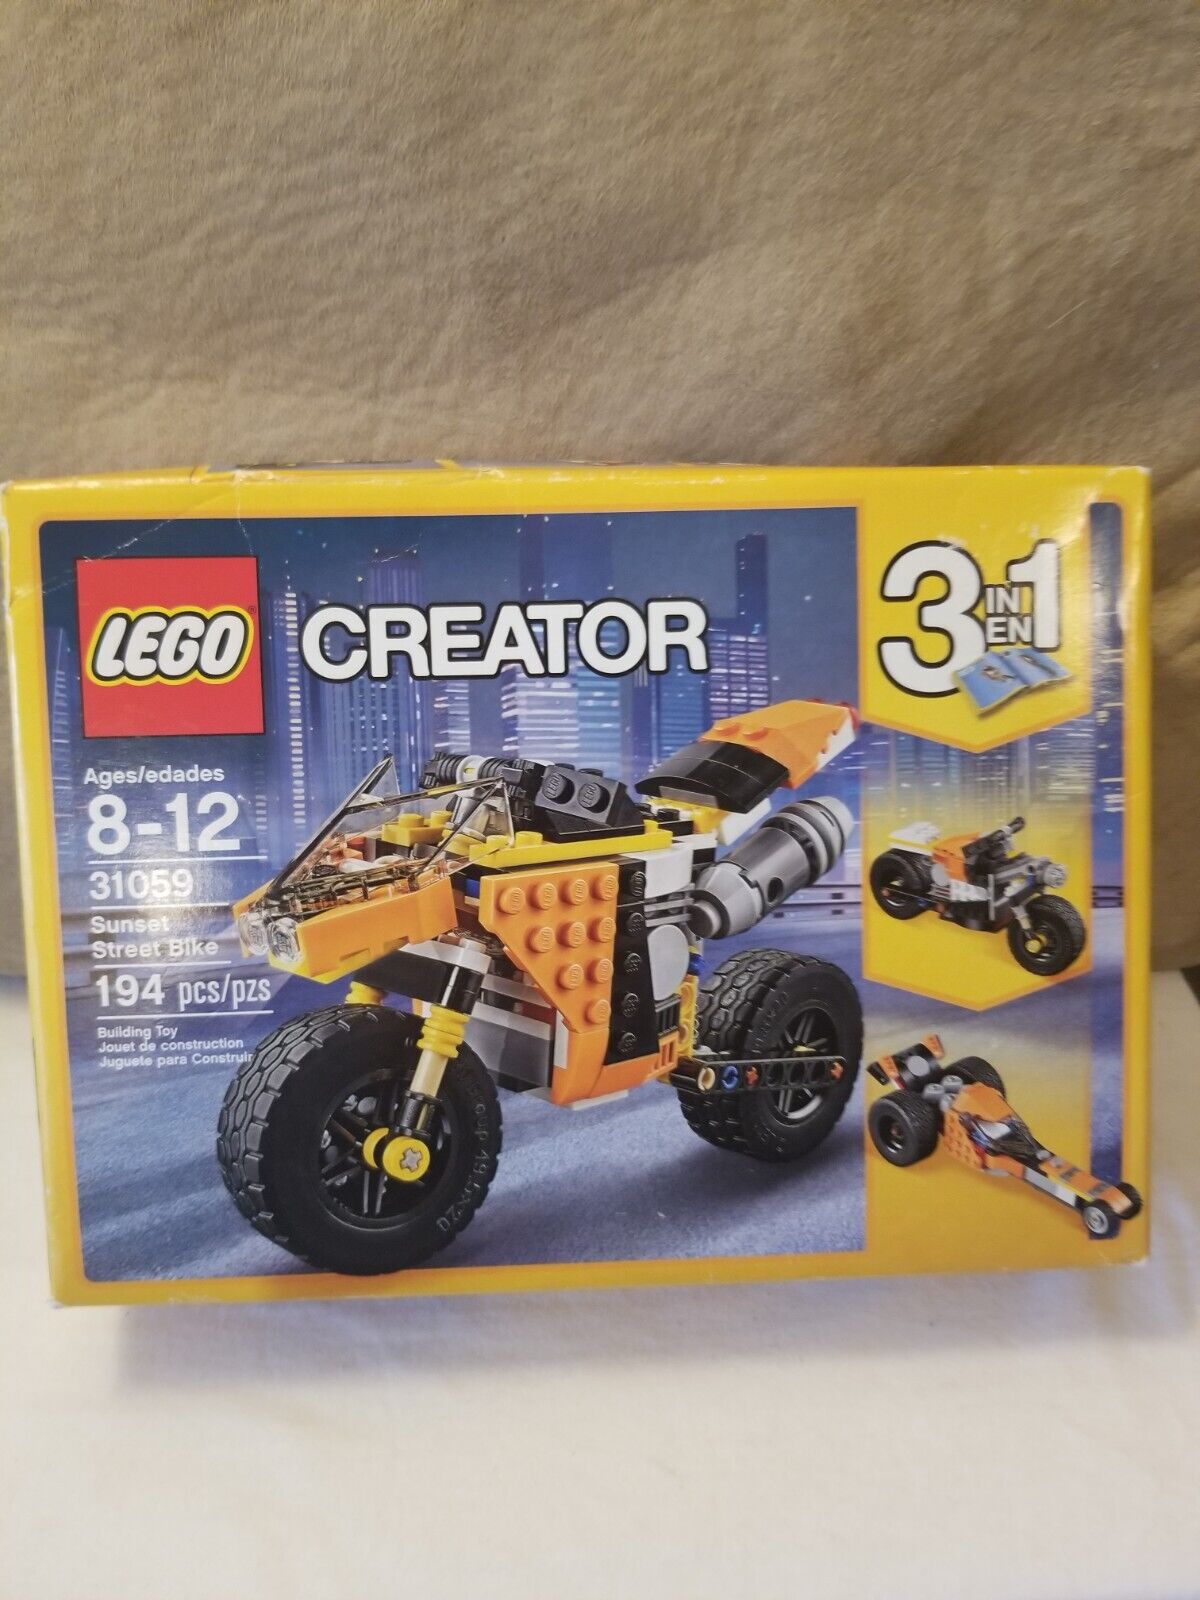 LEGO CREATOR: Sunset Street Bike (31059), New In Box, Some Damage To Box